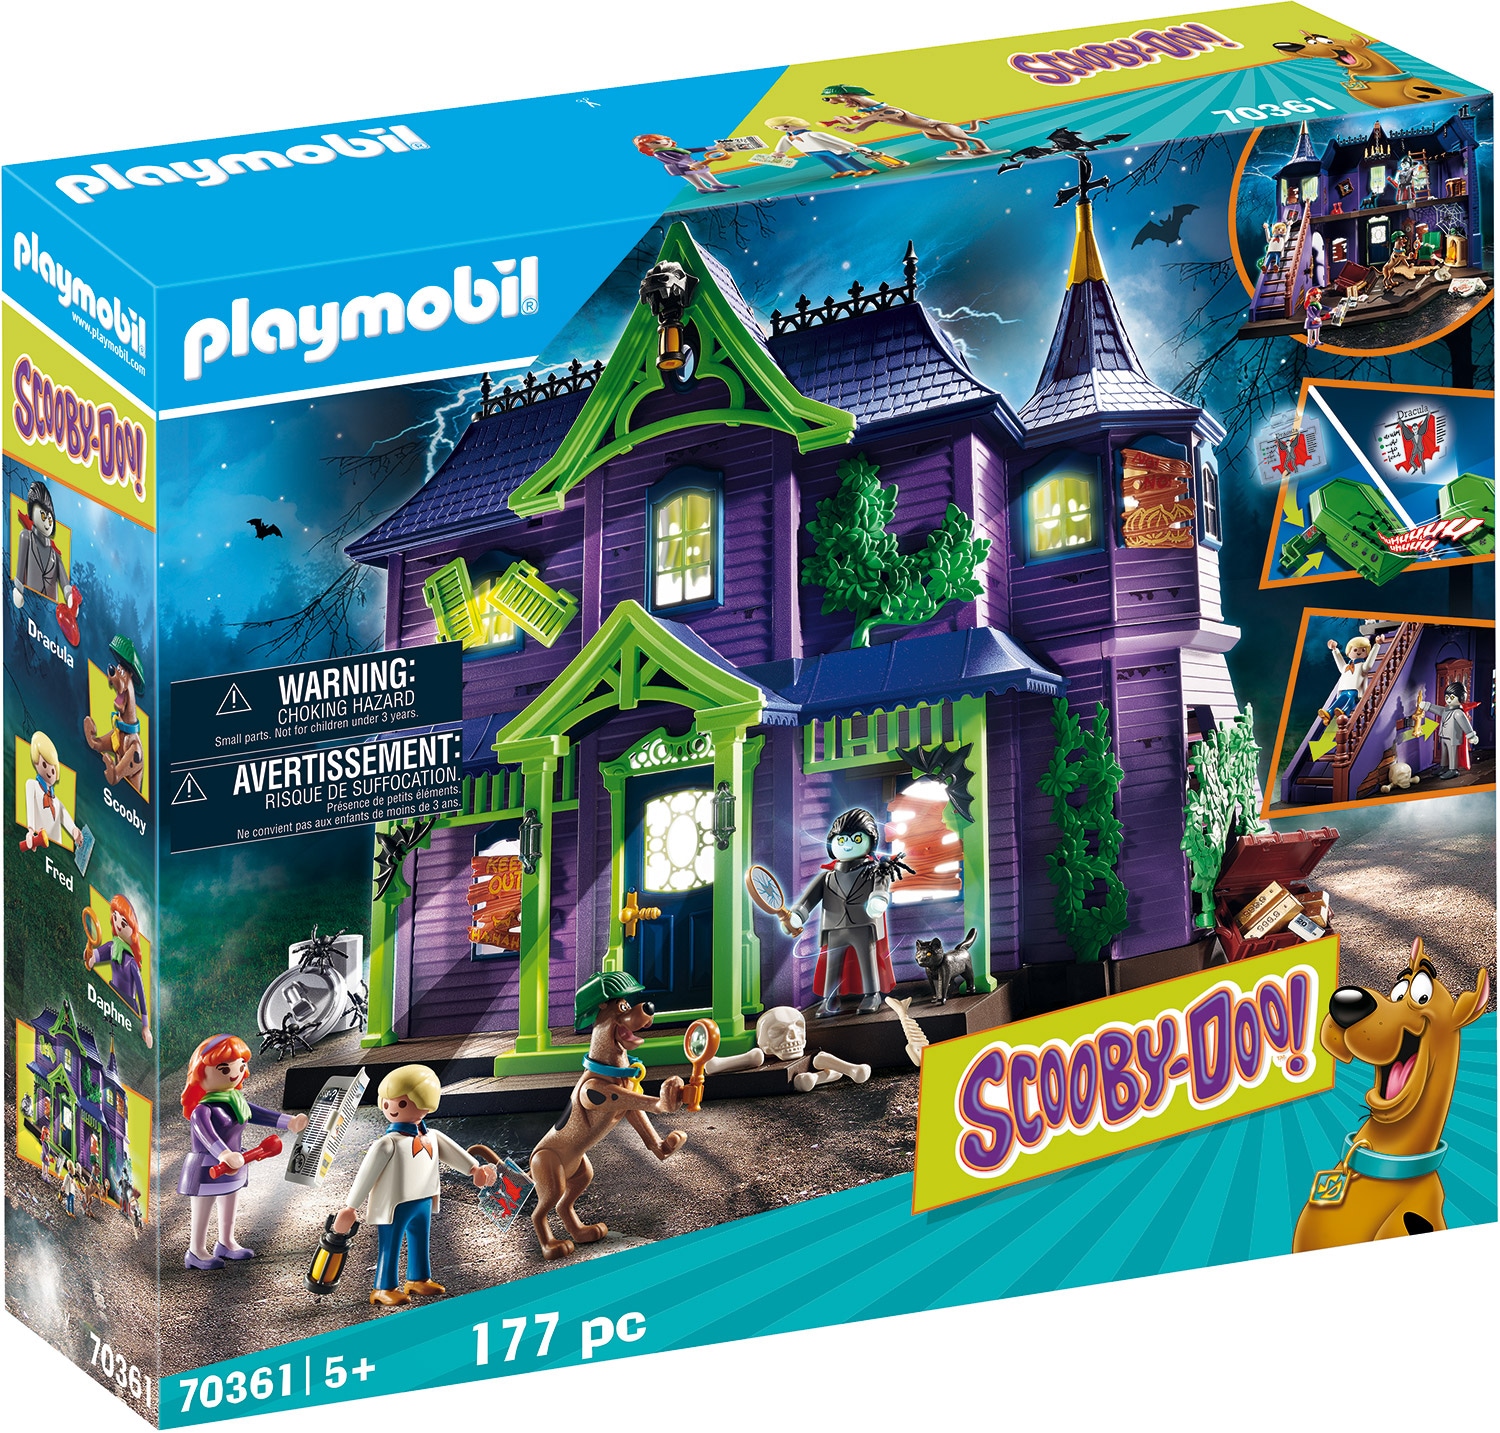 Playmobil® Konstruktions-Spielset »Abenteuer im Geisterhaus (70361), SCOOBY-DOO!«, (177 St.), Made in Germany von Playmobil®